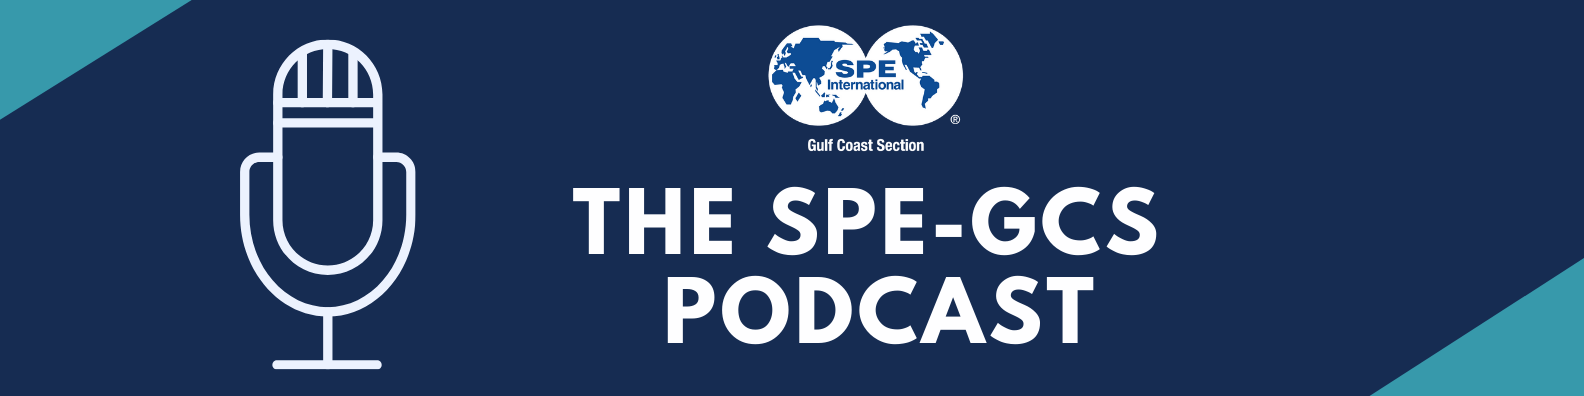 The SPE-GCS Podcast